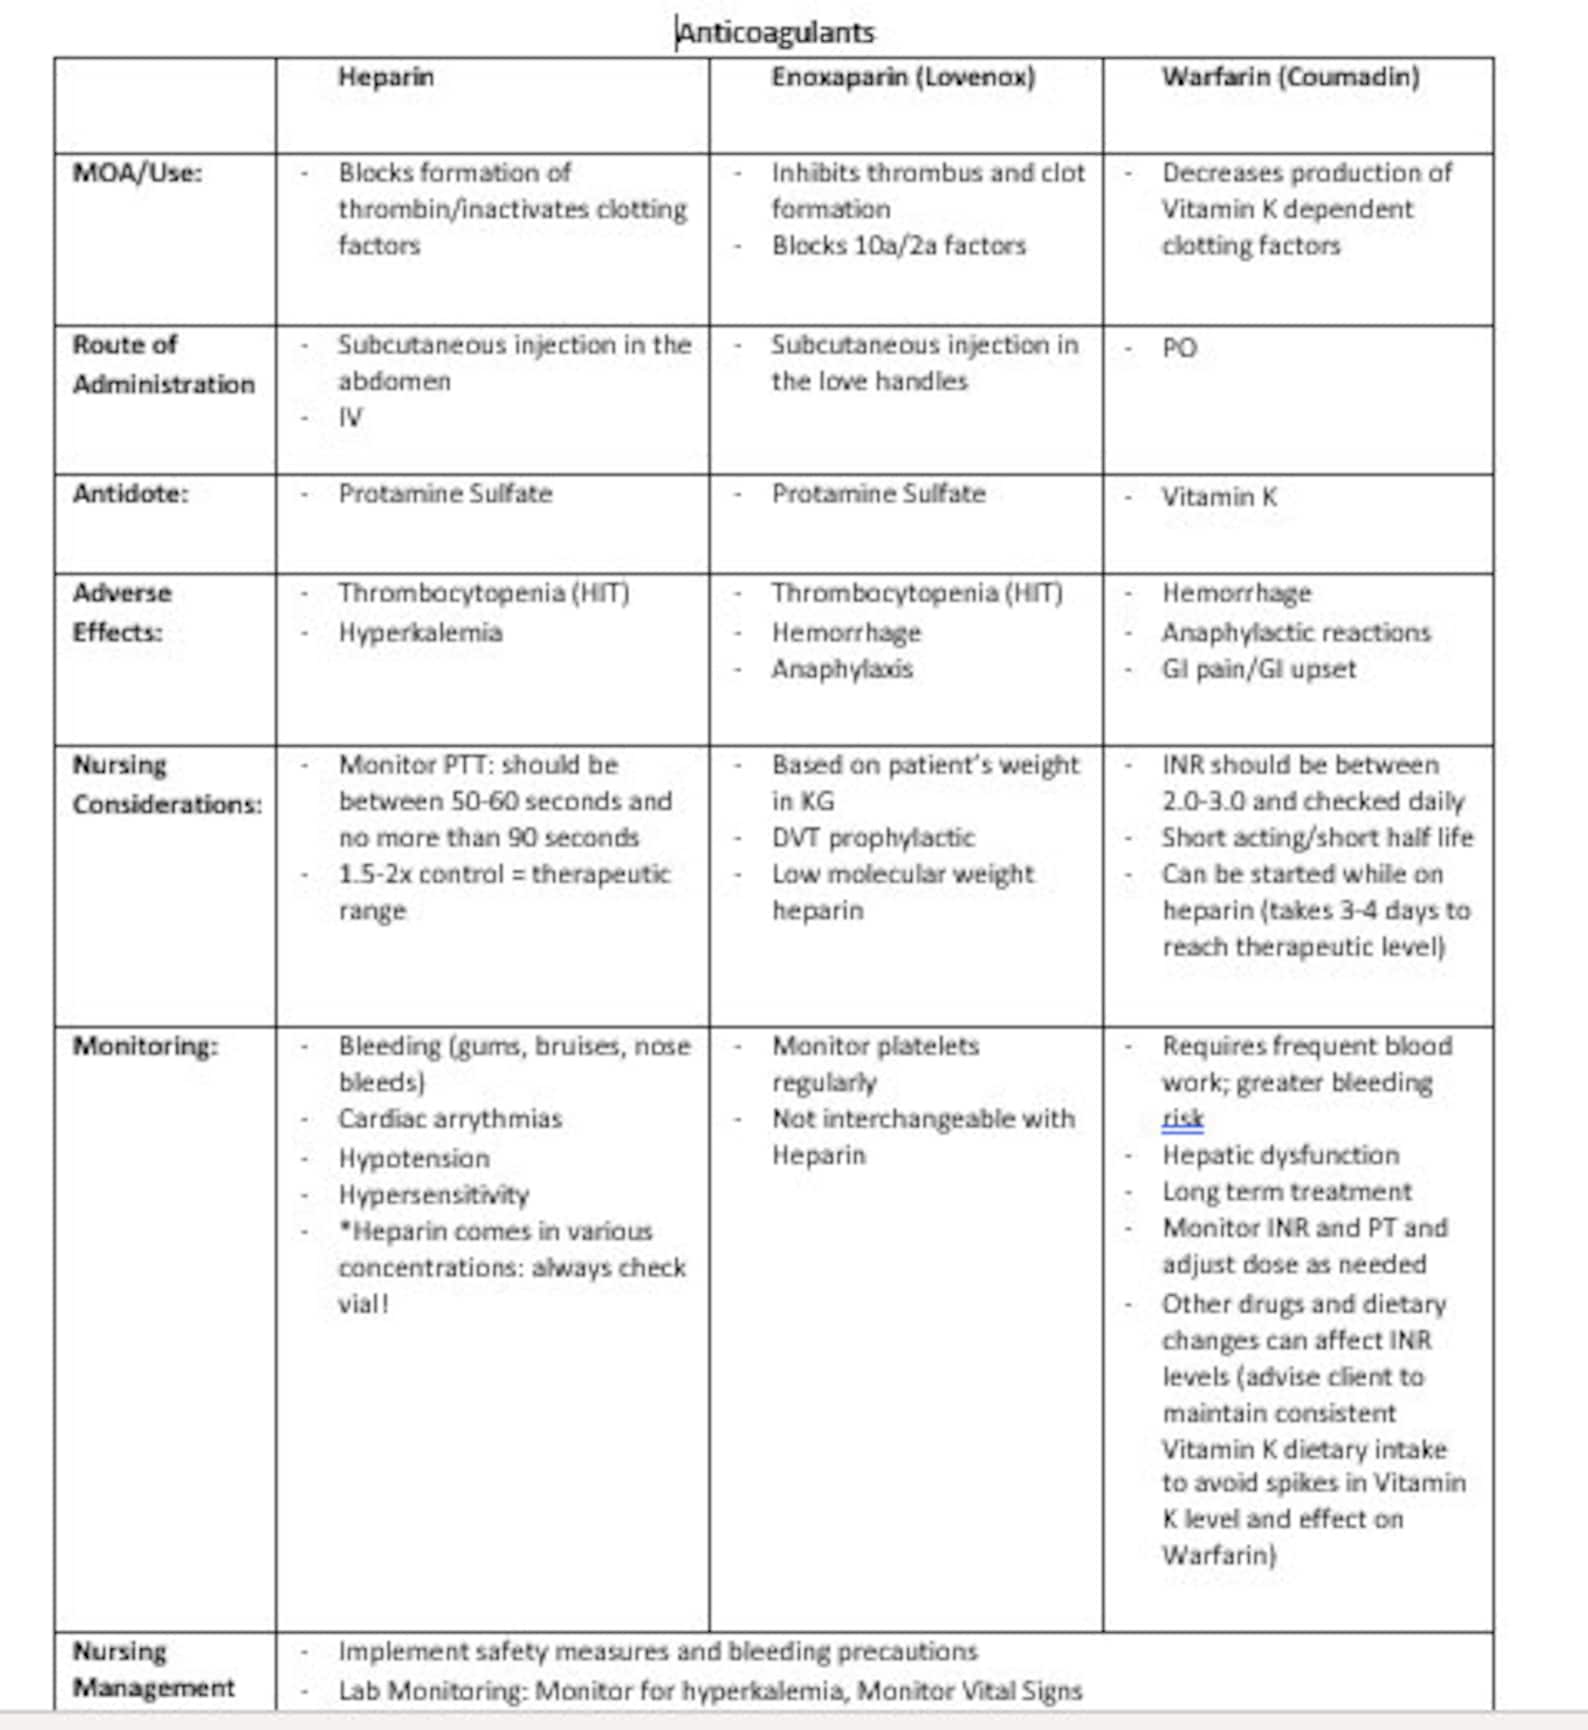 Anticoagulants Comparison Chart